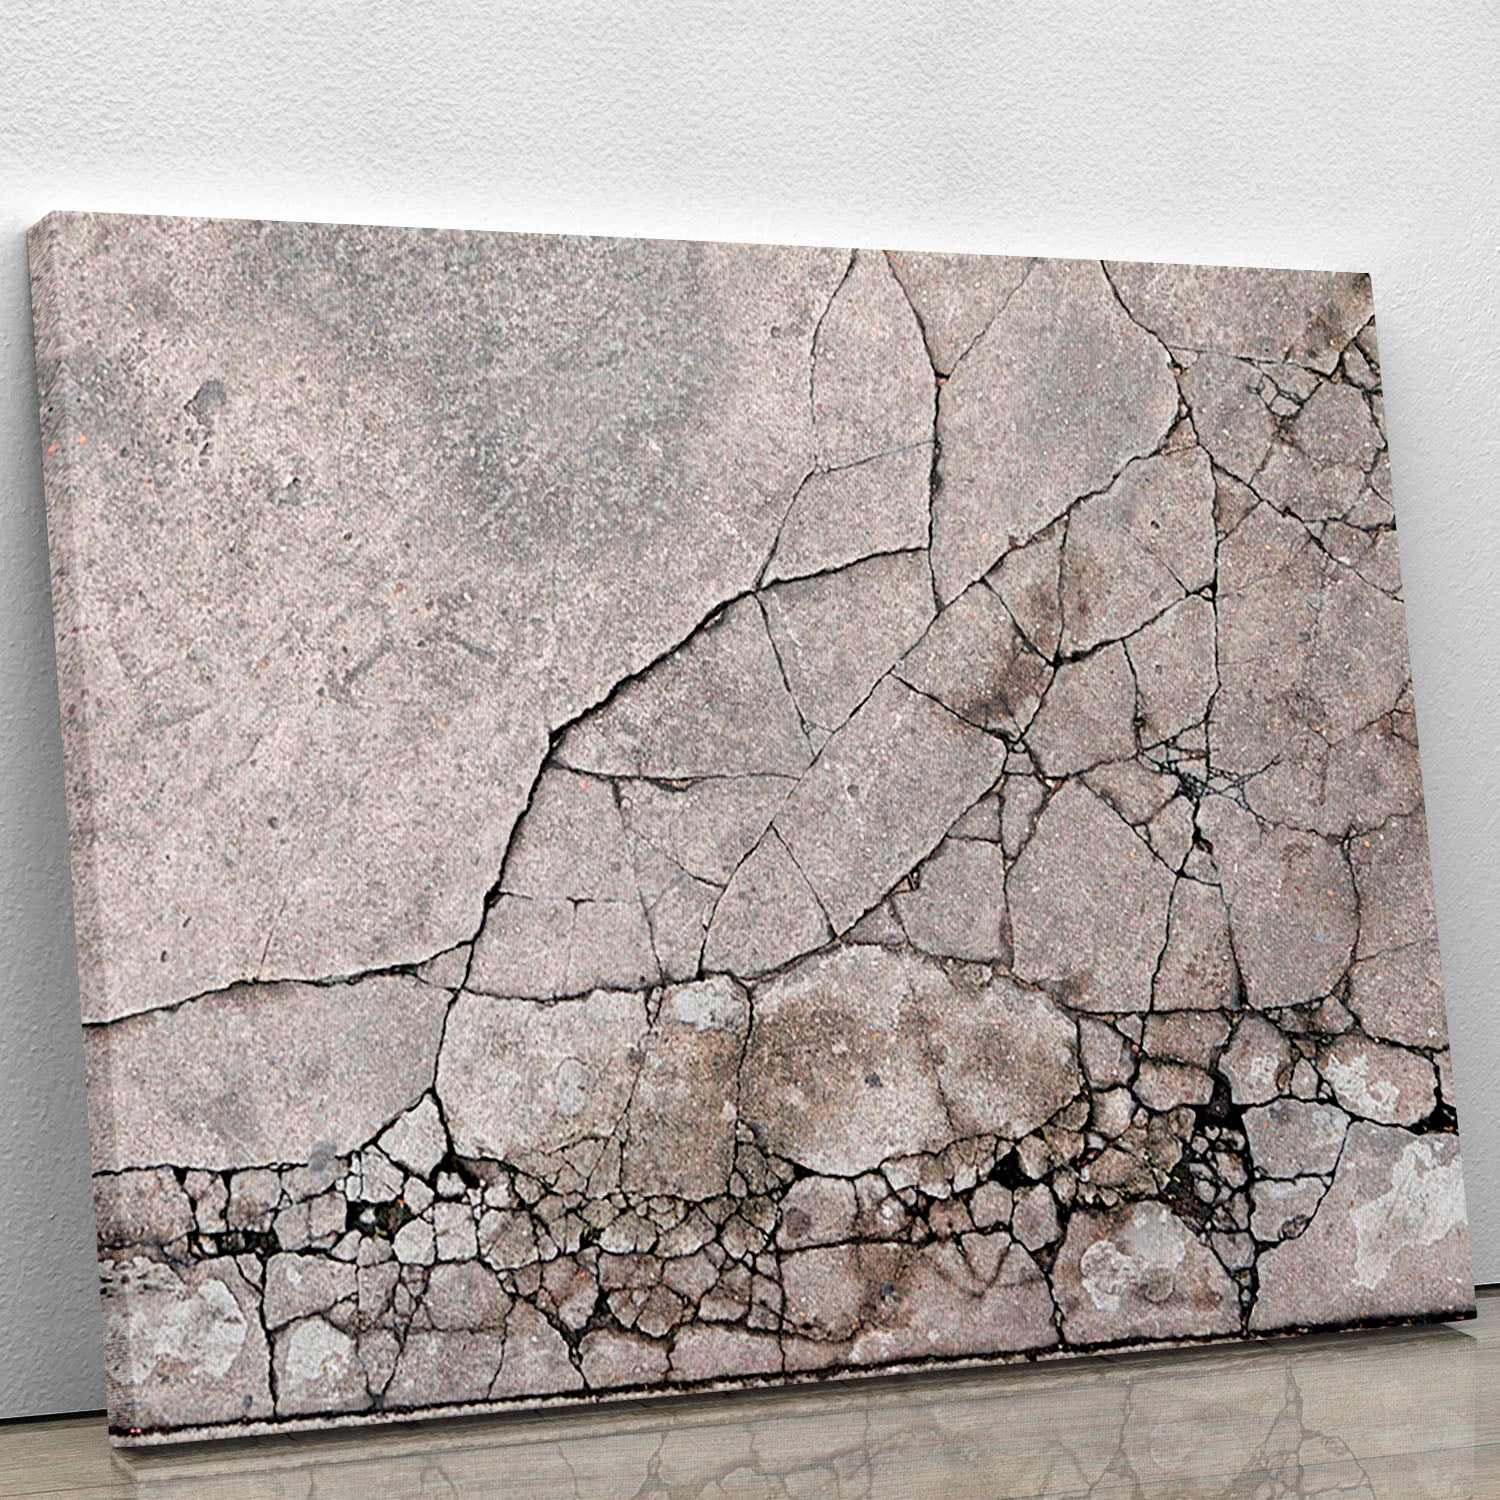 Cracked concrete Canvas Print or Poster - Canvas Art Rocks - 1